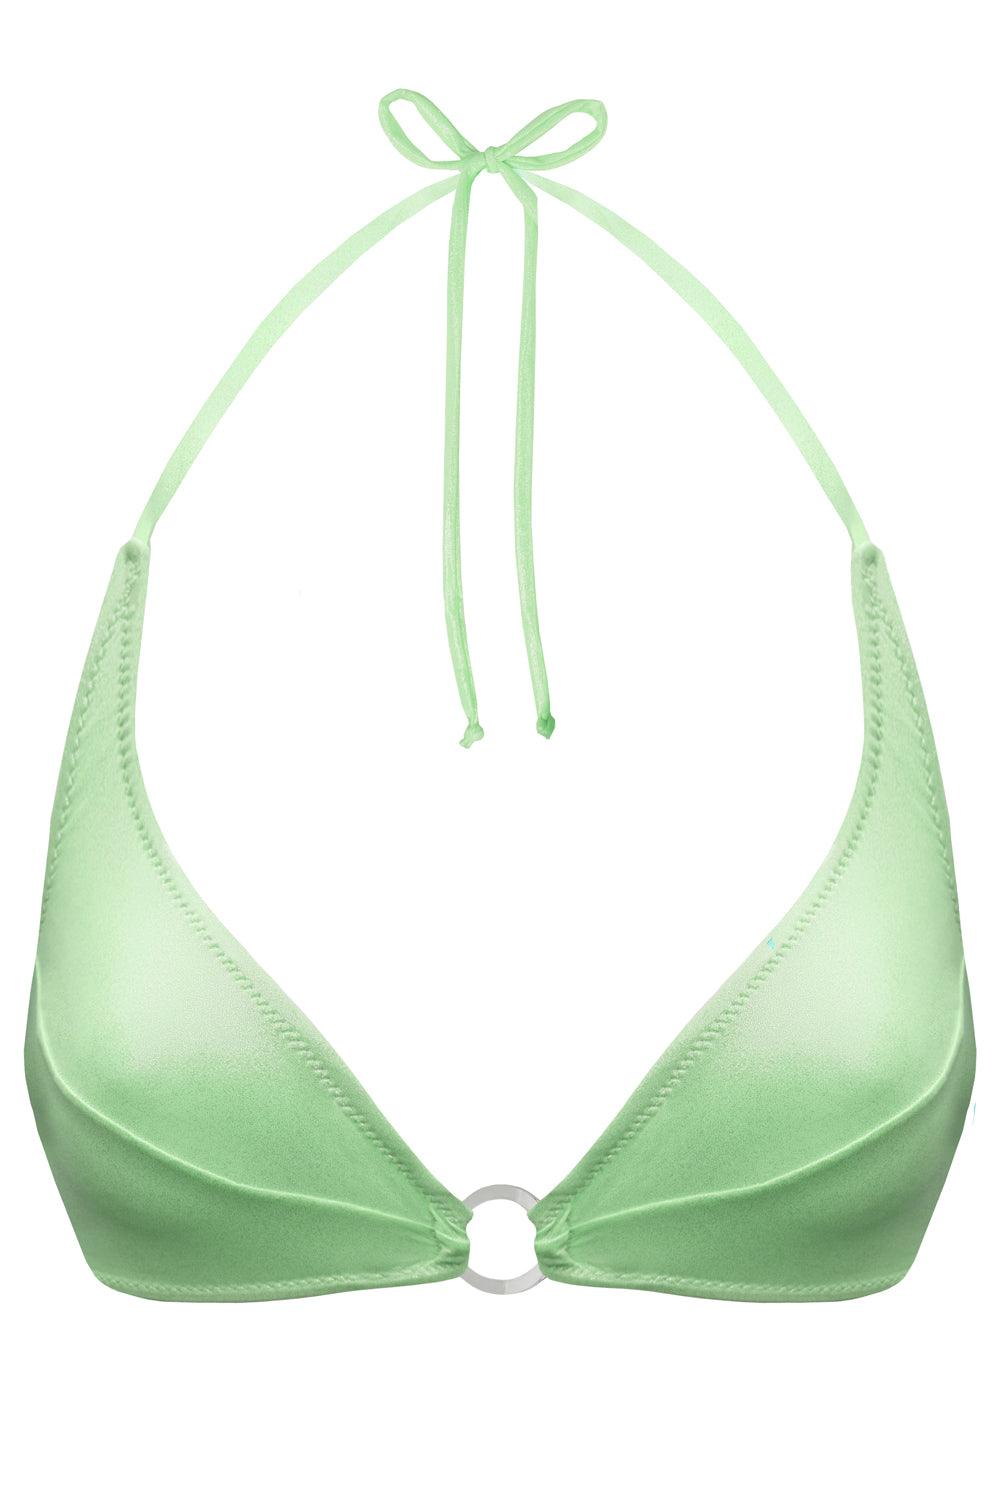 Titaniya Greenery bikini top - Bikini top by yesUndress. Shop on yesUndress